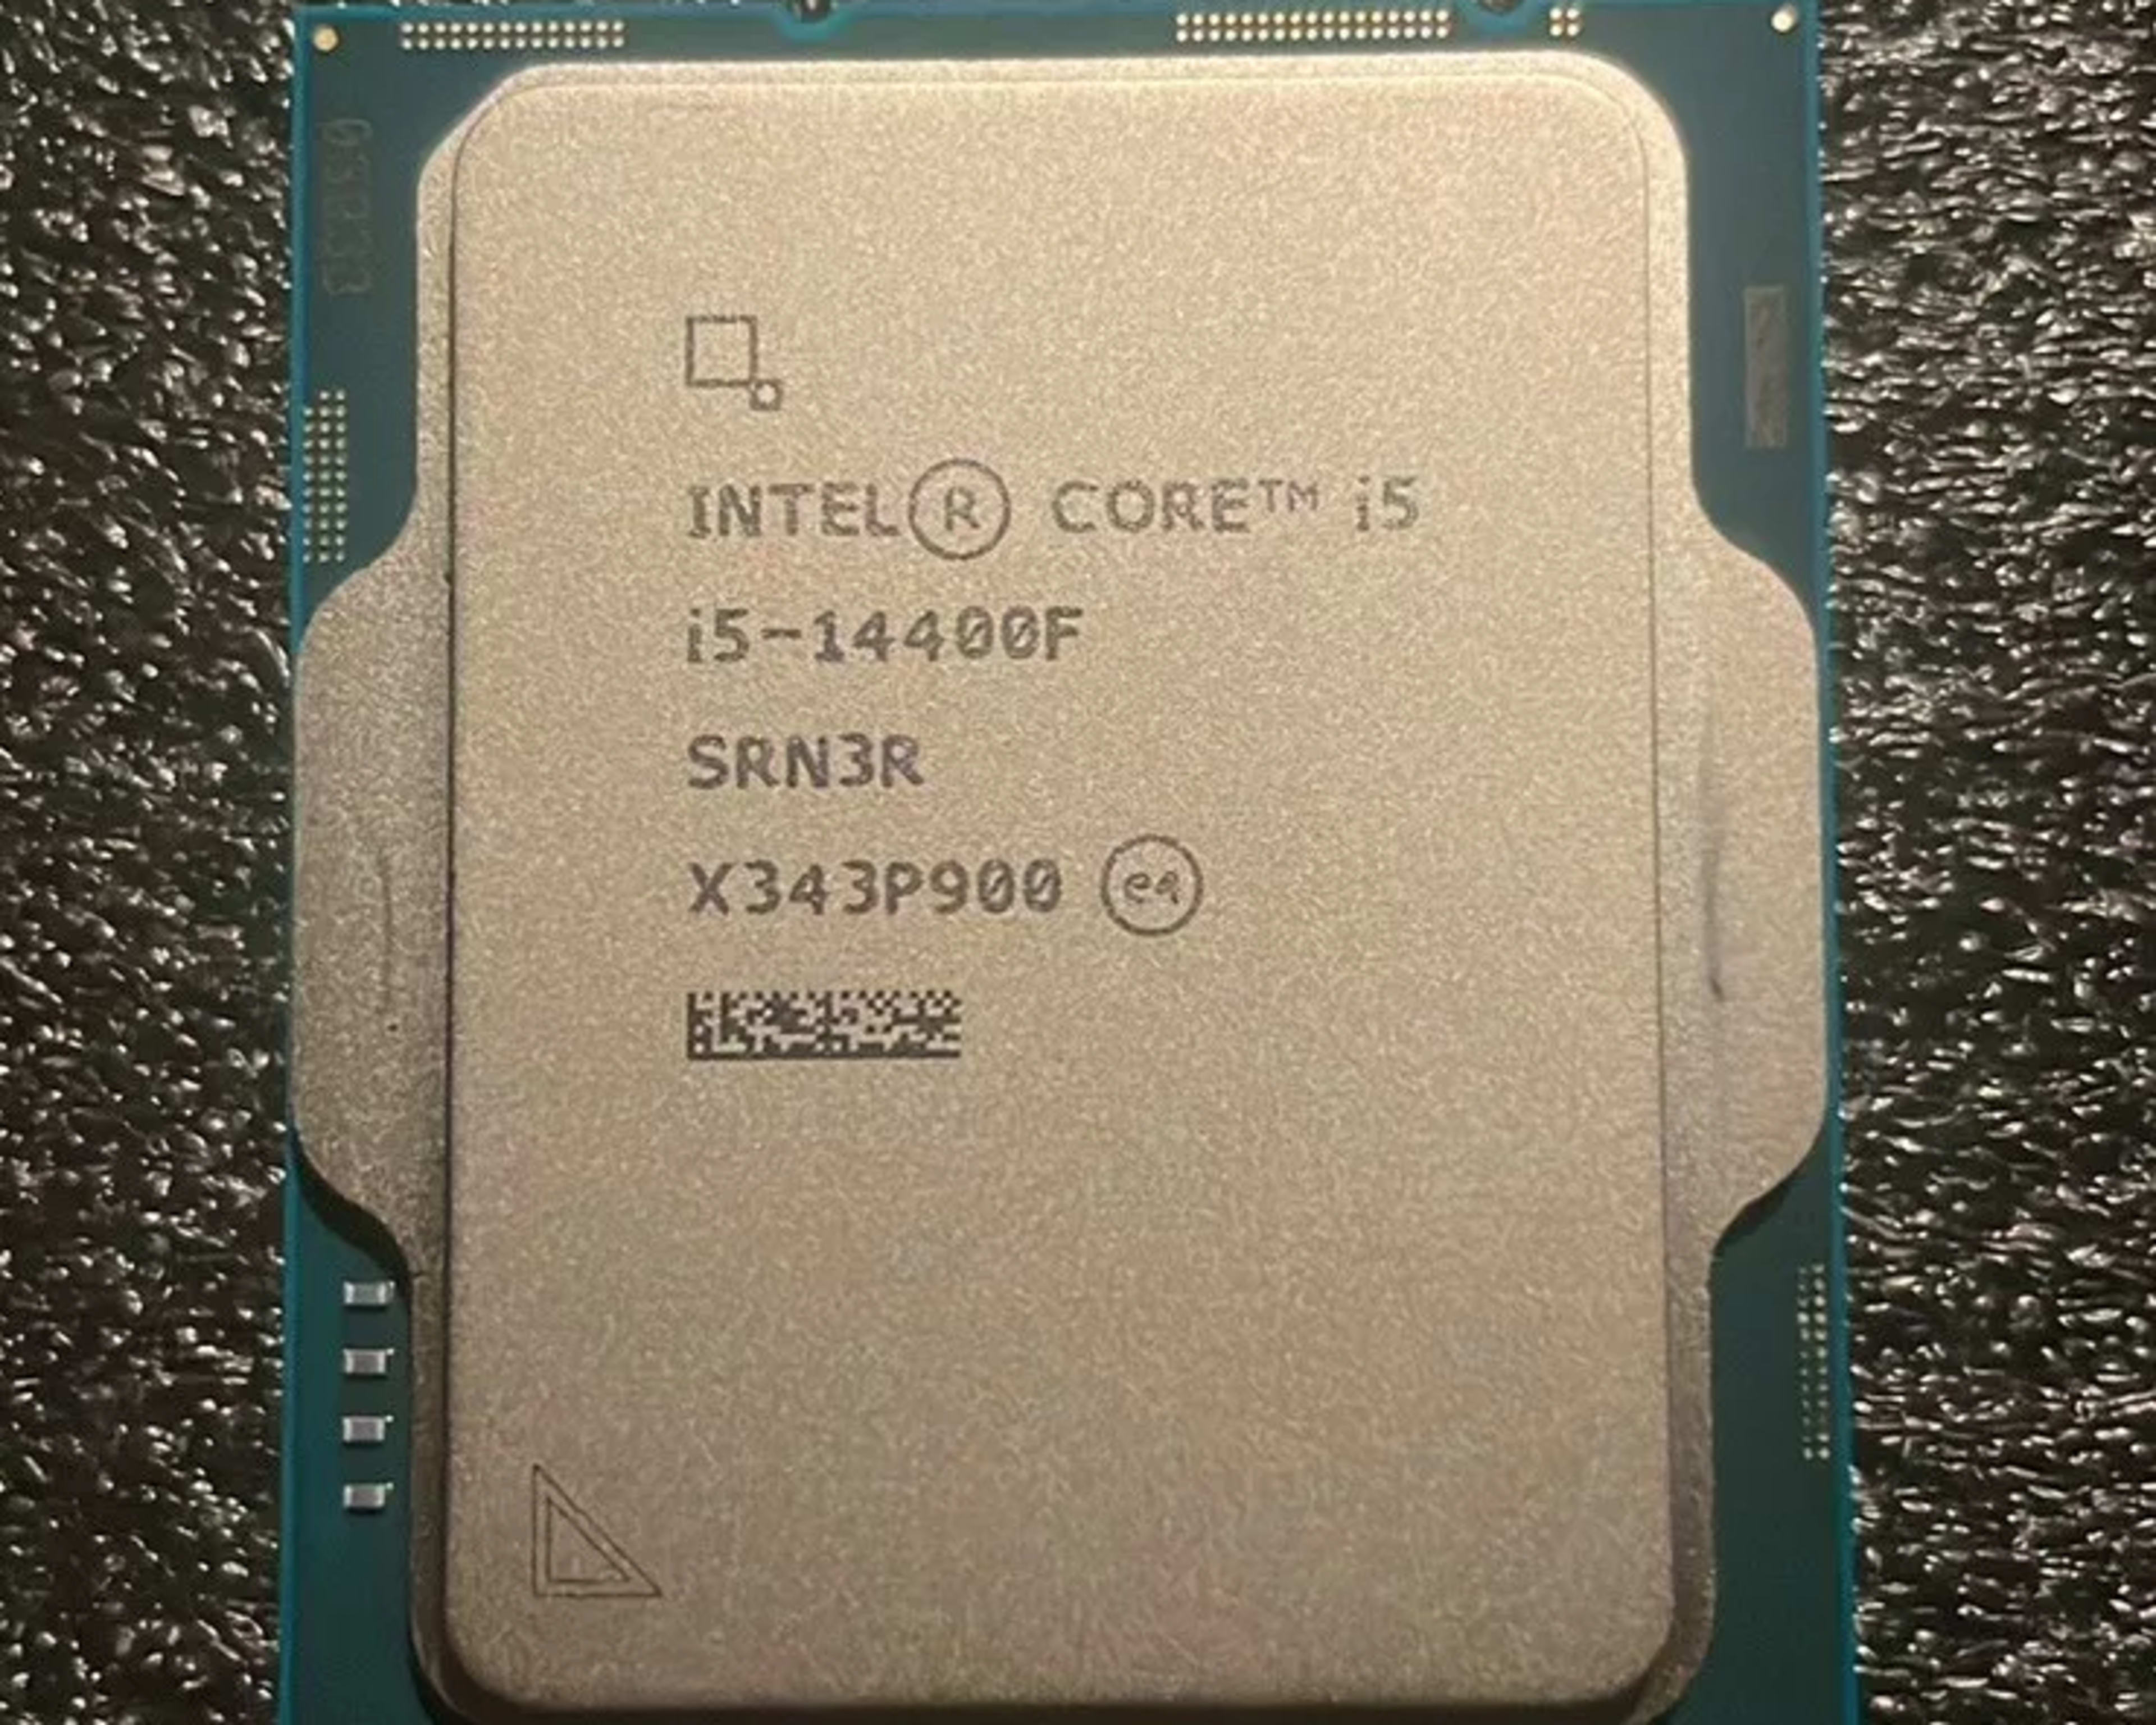 ntel Core i5-14400F Processor 10 cores (6 P-cores + 4 E-cores) up to 4.7 GHz